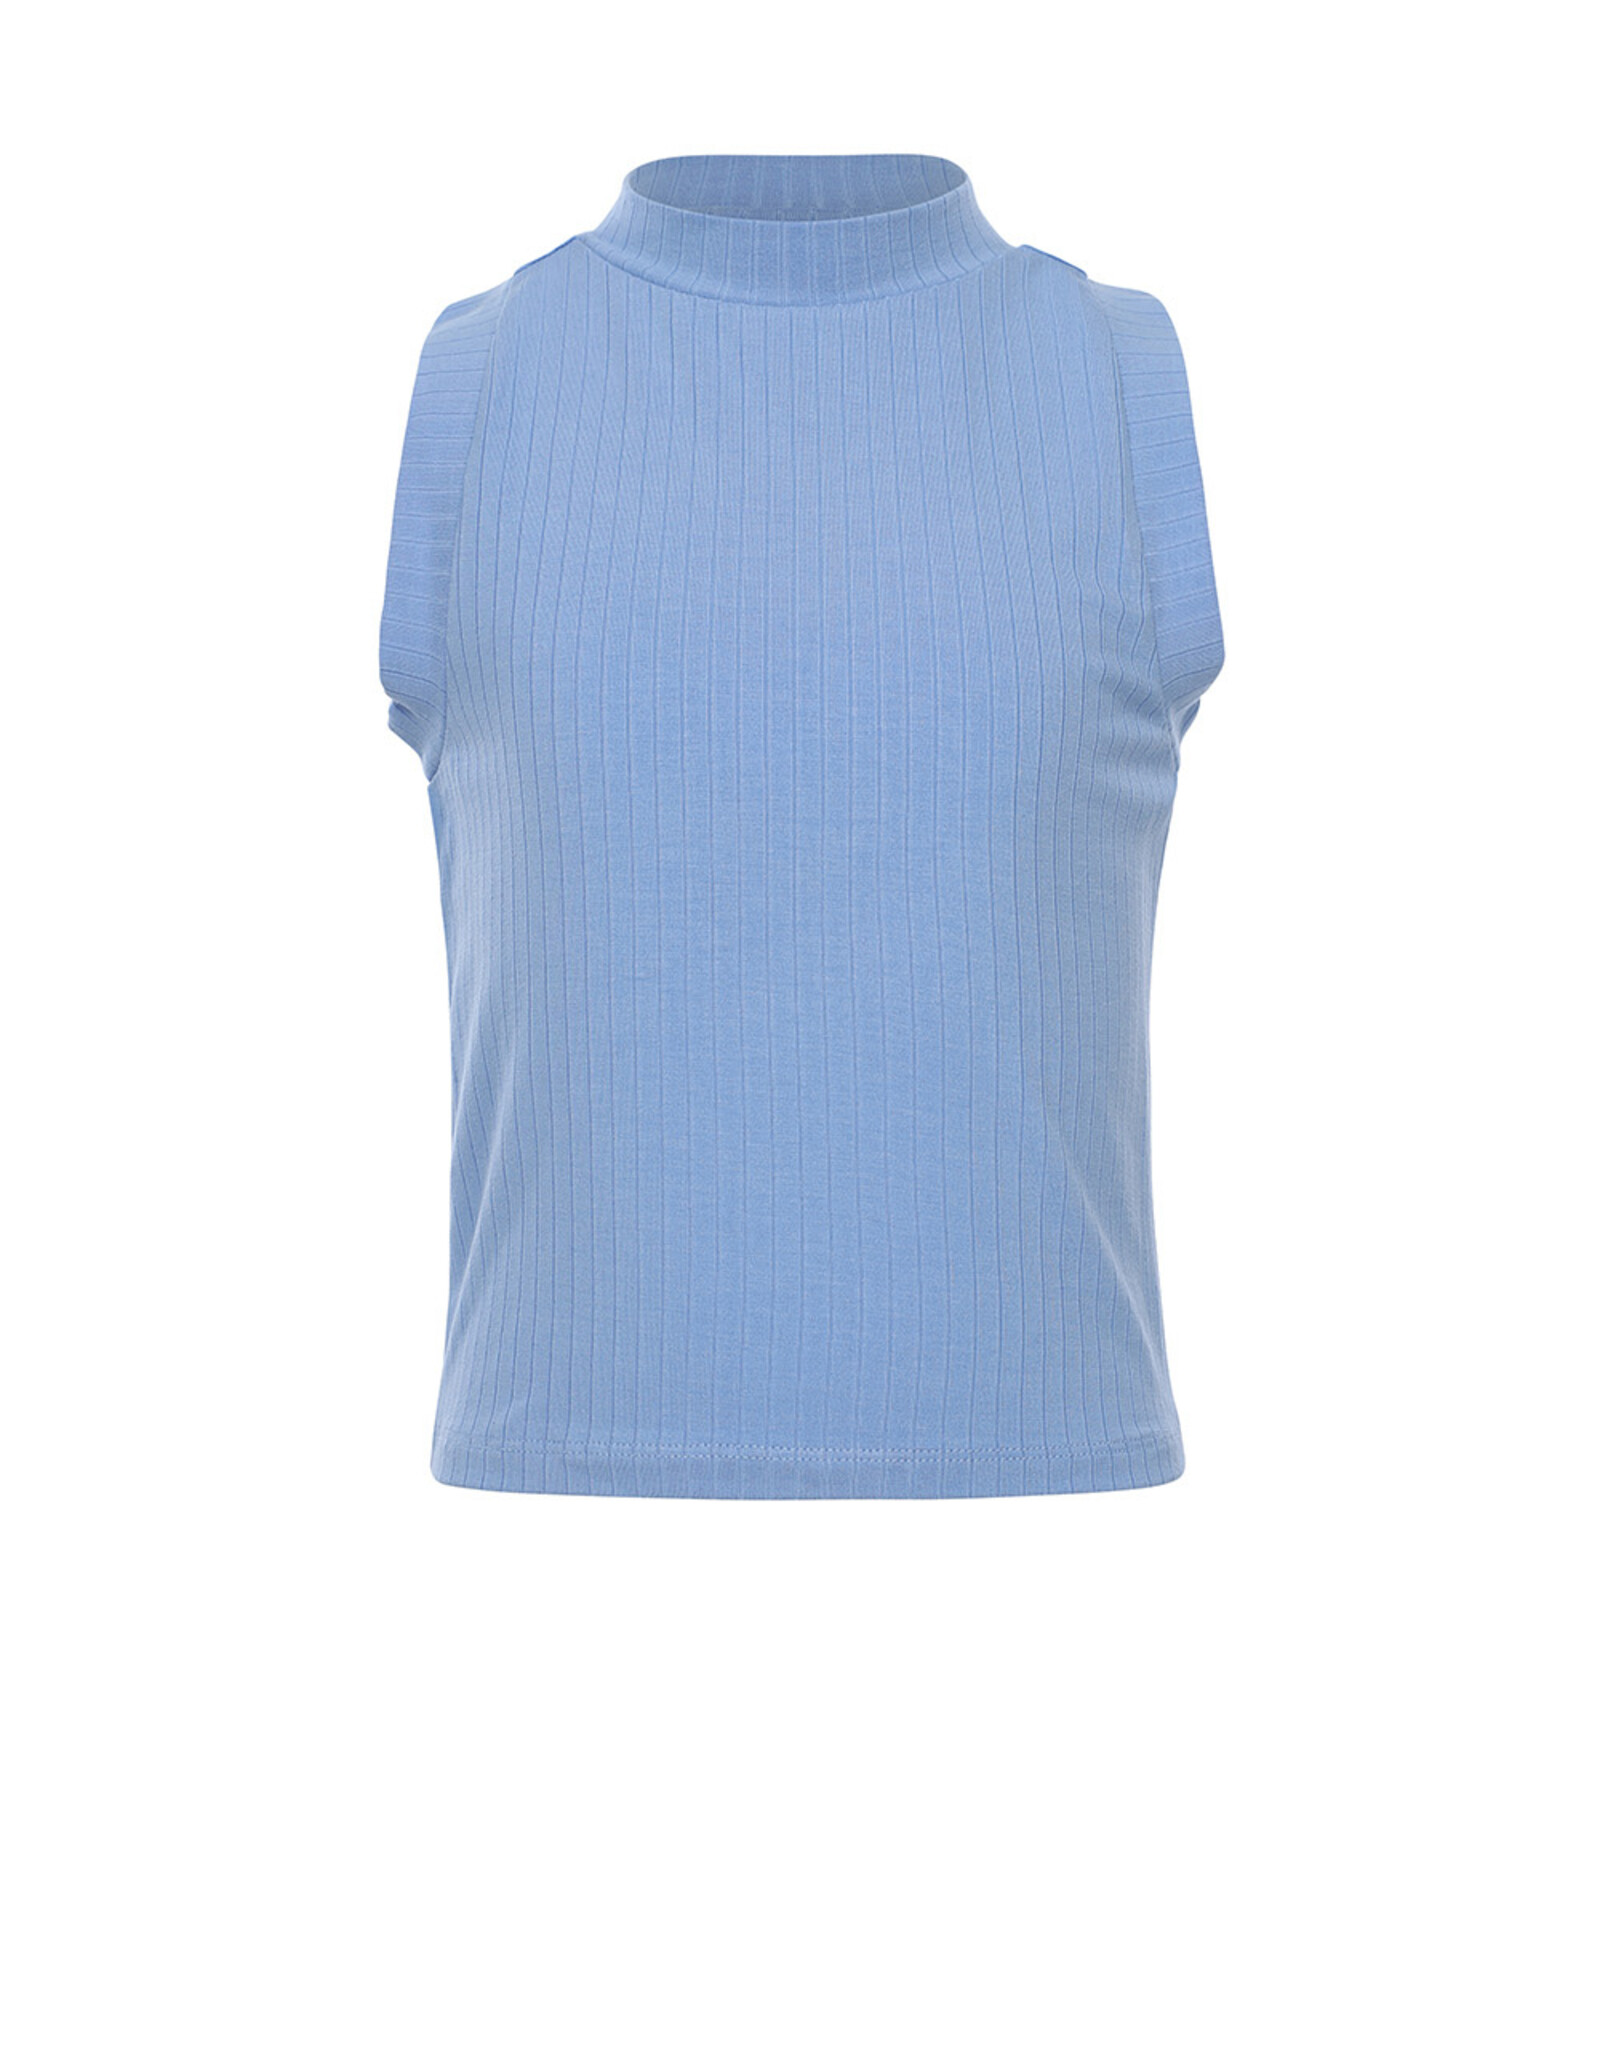 Looxs T-shirt 5408 - blauw